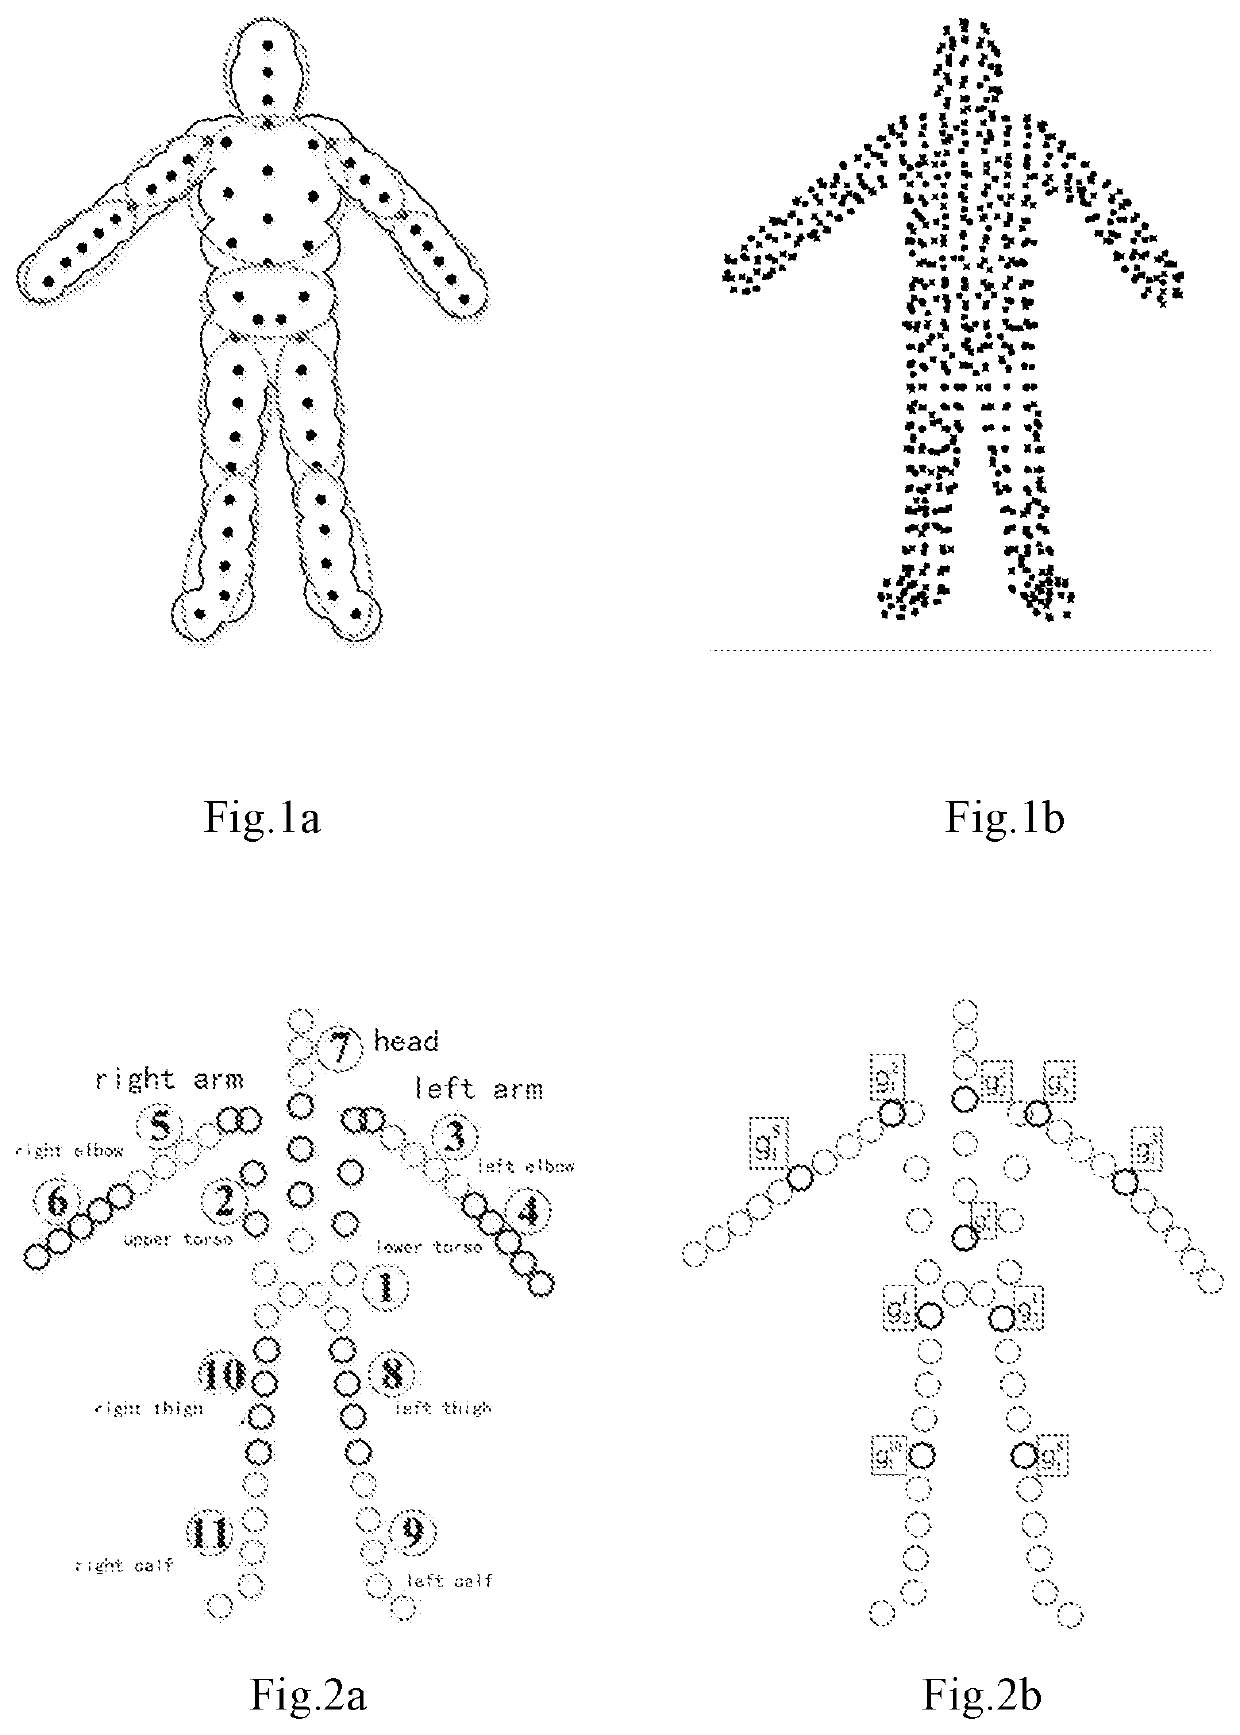 Method for three-dimensional human pose estimation